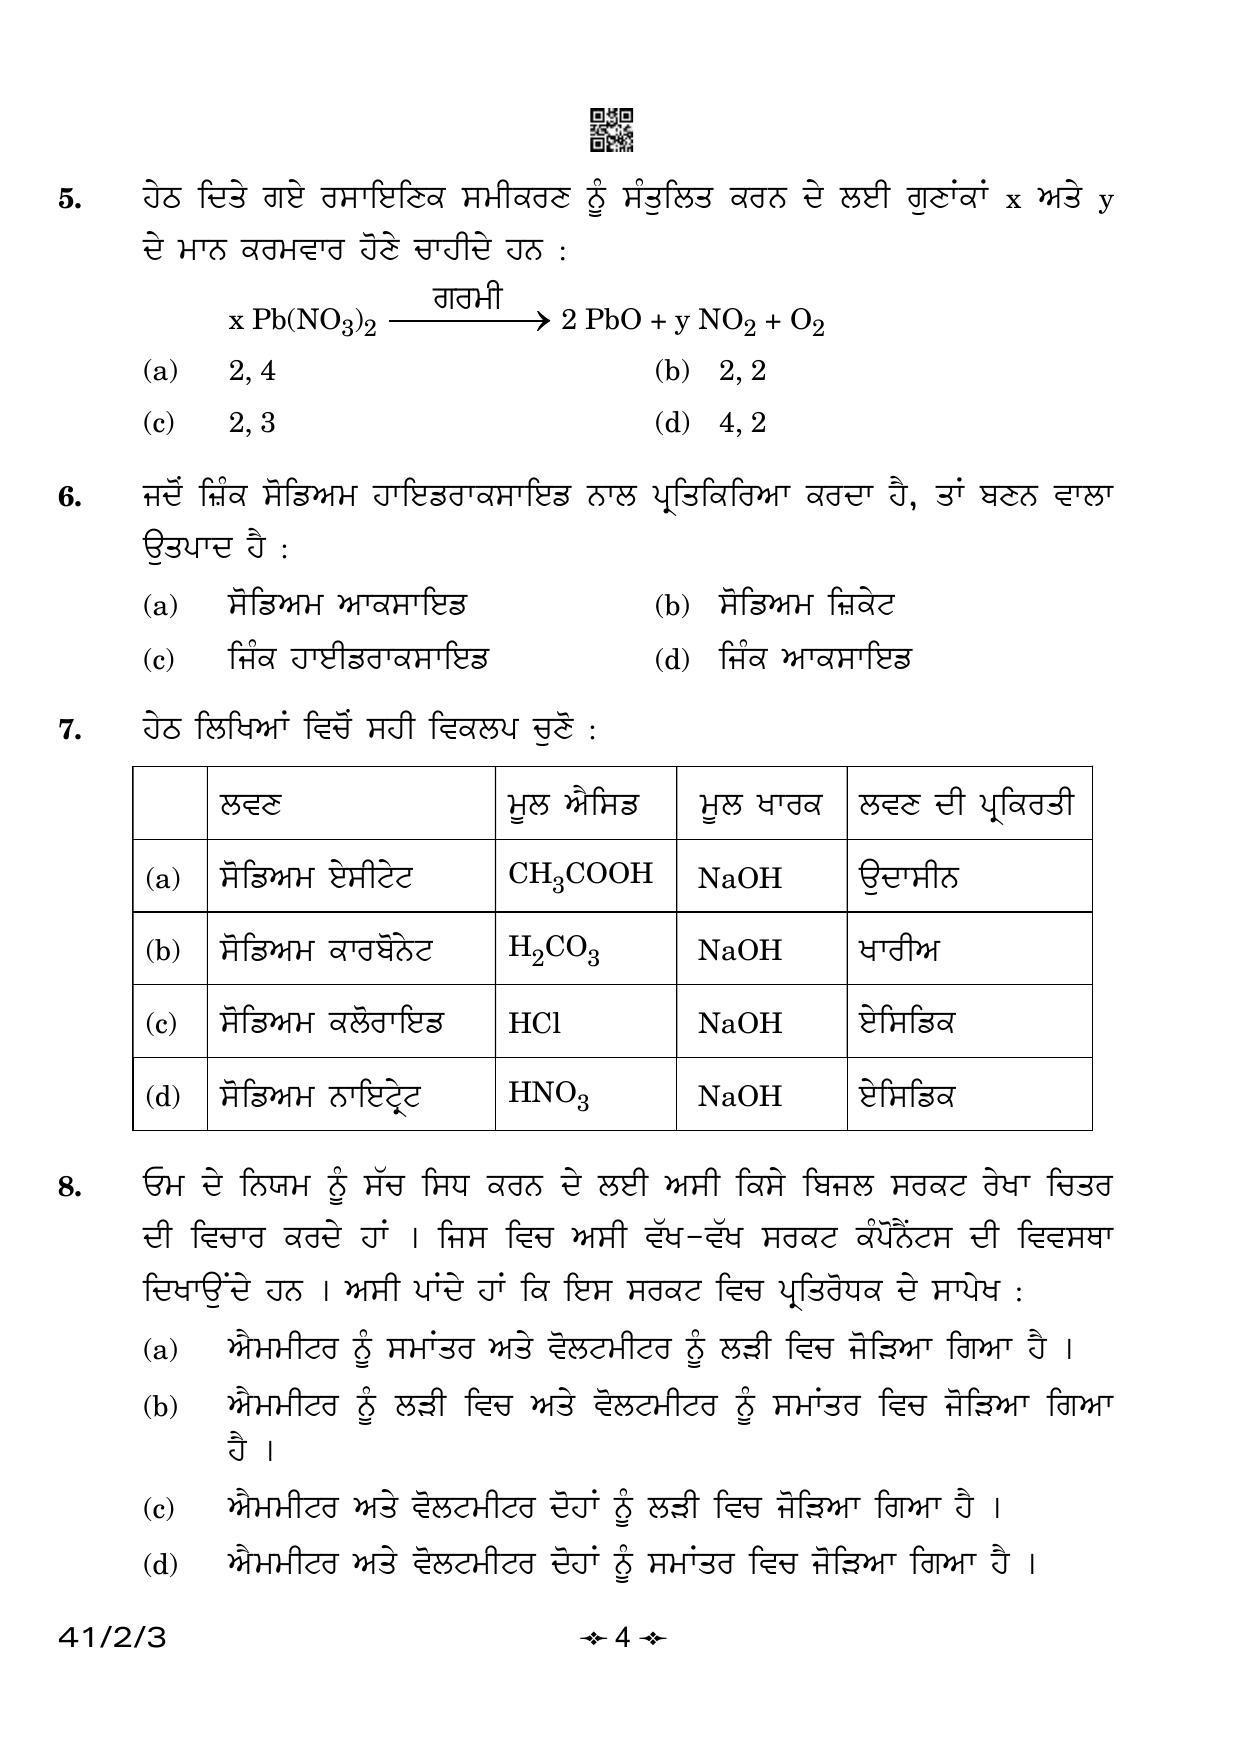 CBSE Class 10 41-2-3 Science Punjabi Version 2023 Question Paper - Page 4